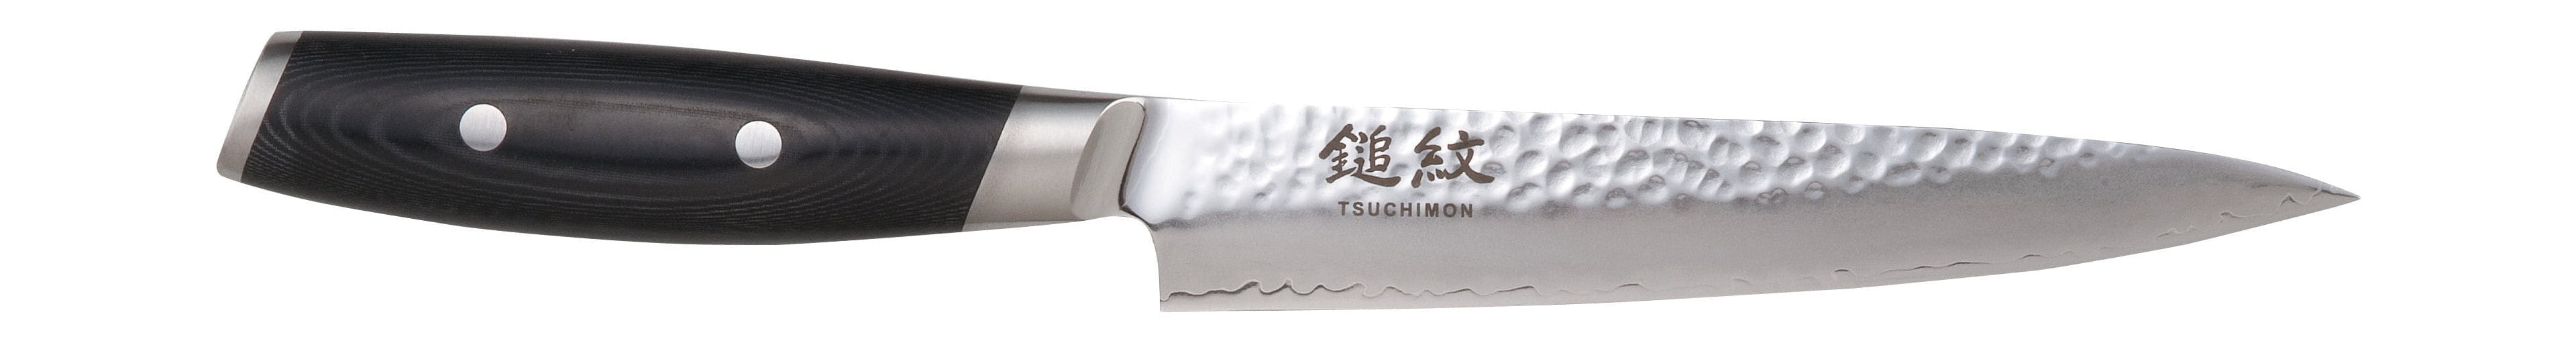 Yaxell Tsuchimon Carving Knife, 18 Cm